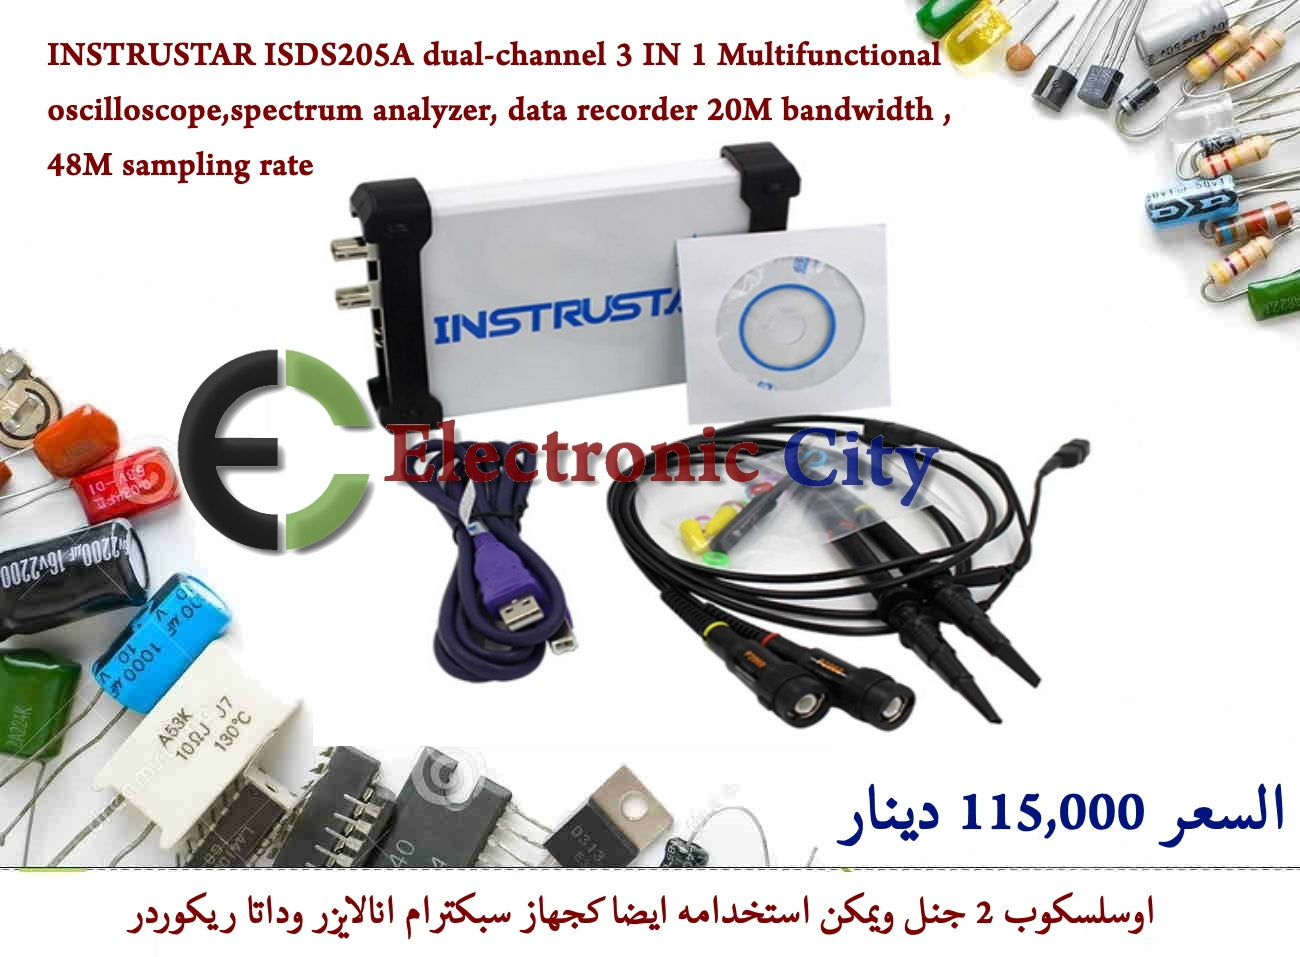 INSTRUSTAR ISDS205A dual-channel 3 IN 1 Multifunctional oscilloscope,spectrum analyzer, data recorder 20M bandwidth , 48M sampling rate